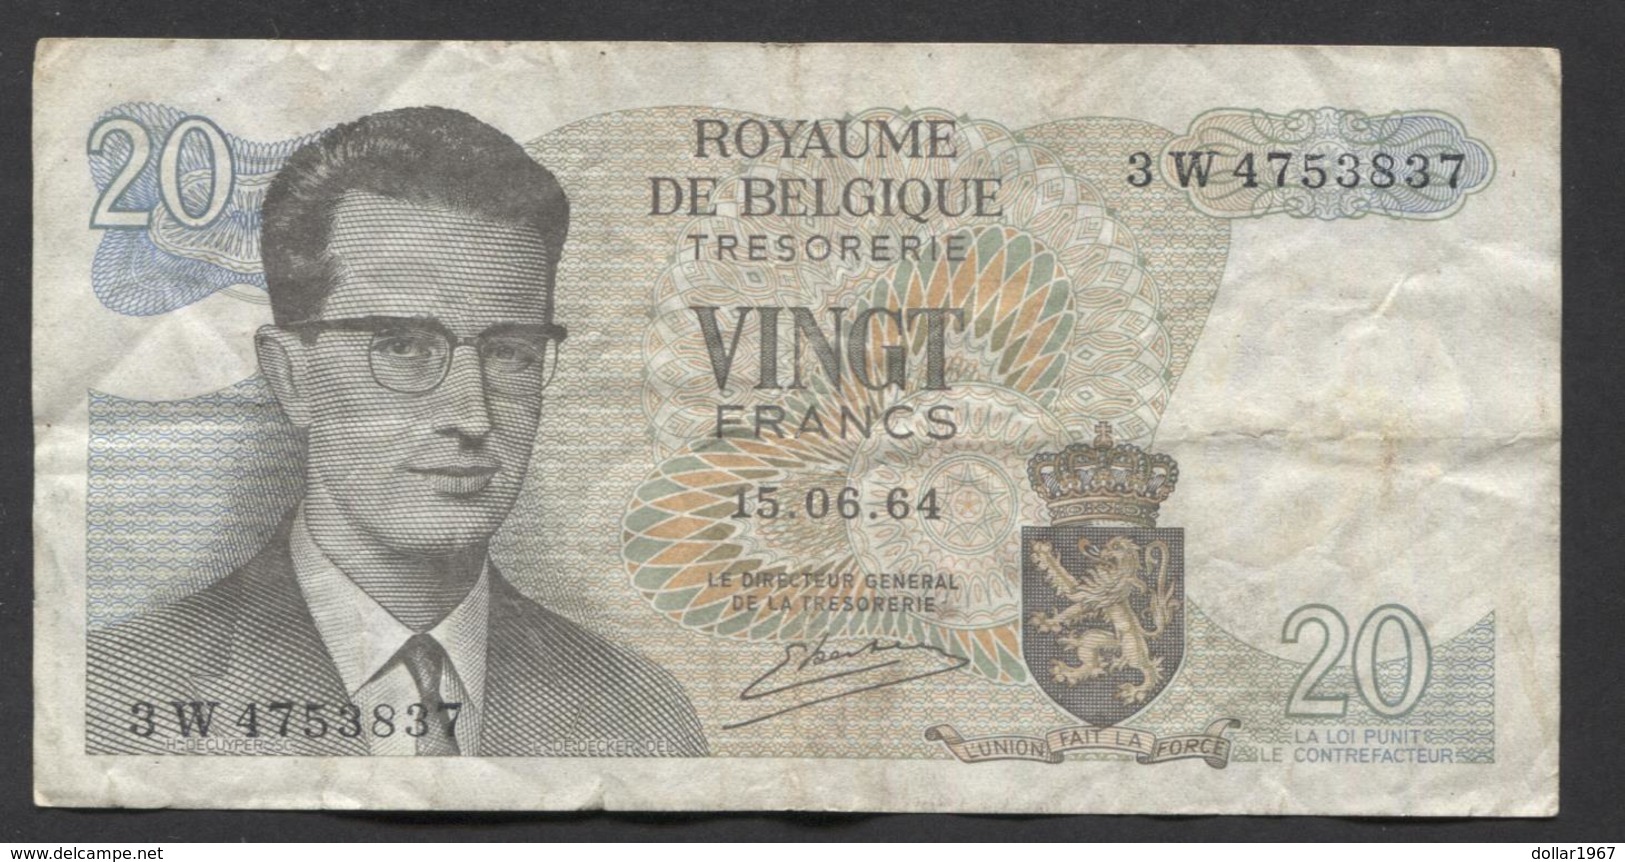 België Belgique Belgium 15 06 1964 -  20 Francs Atomium Baudouin. 3 W 4753837 - 20 Francos